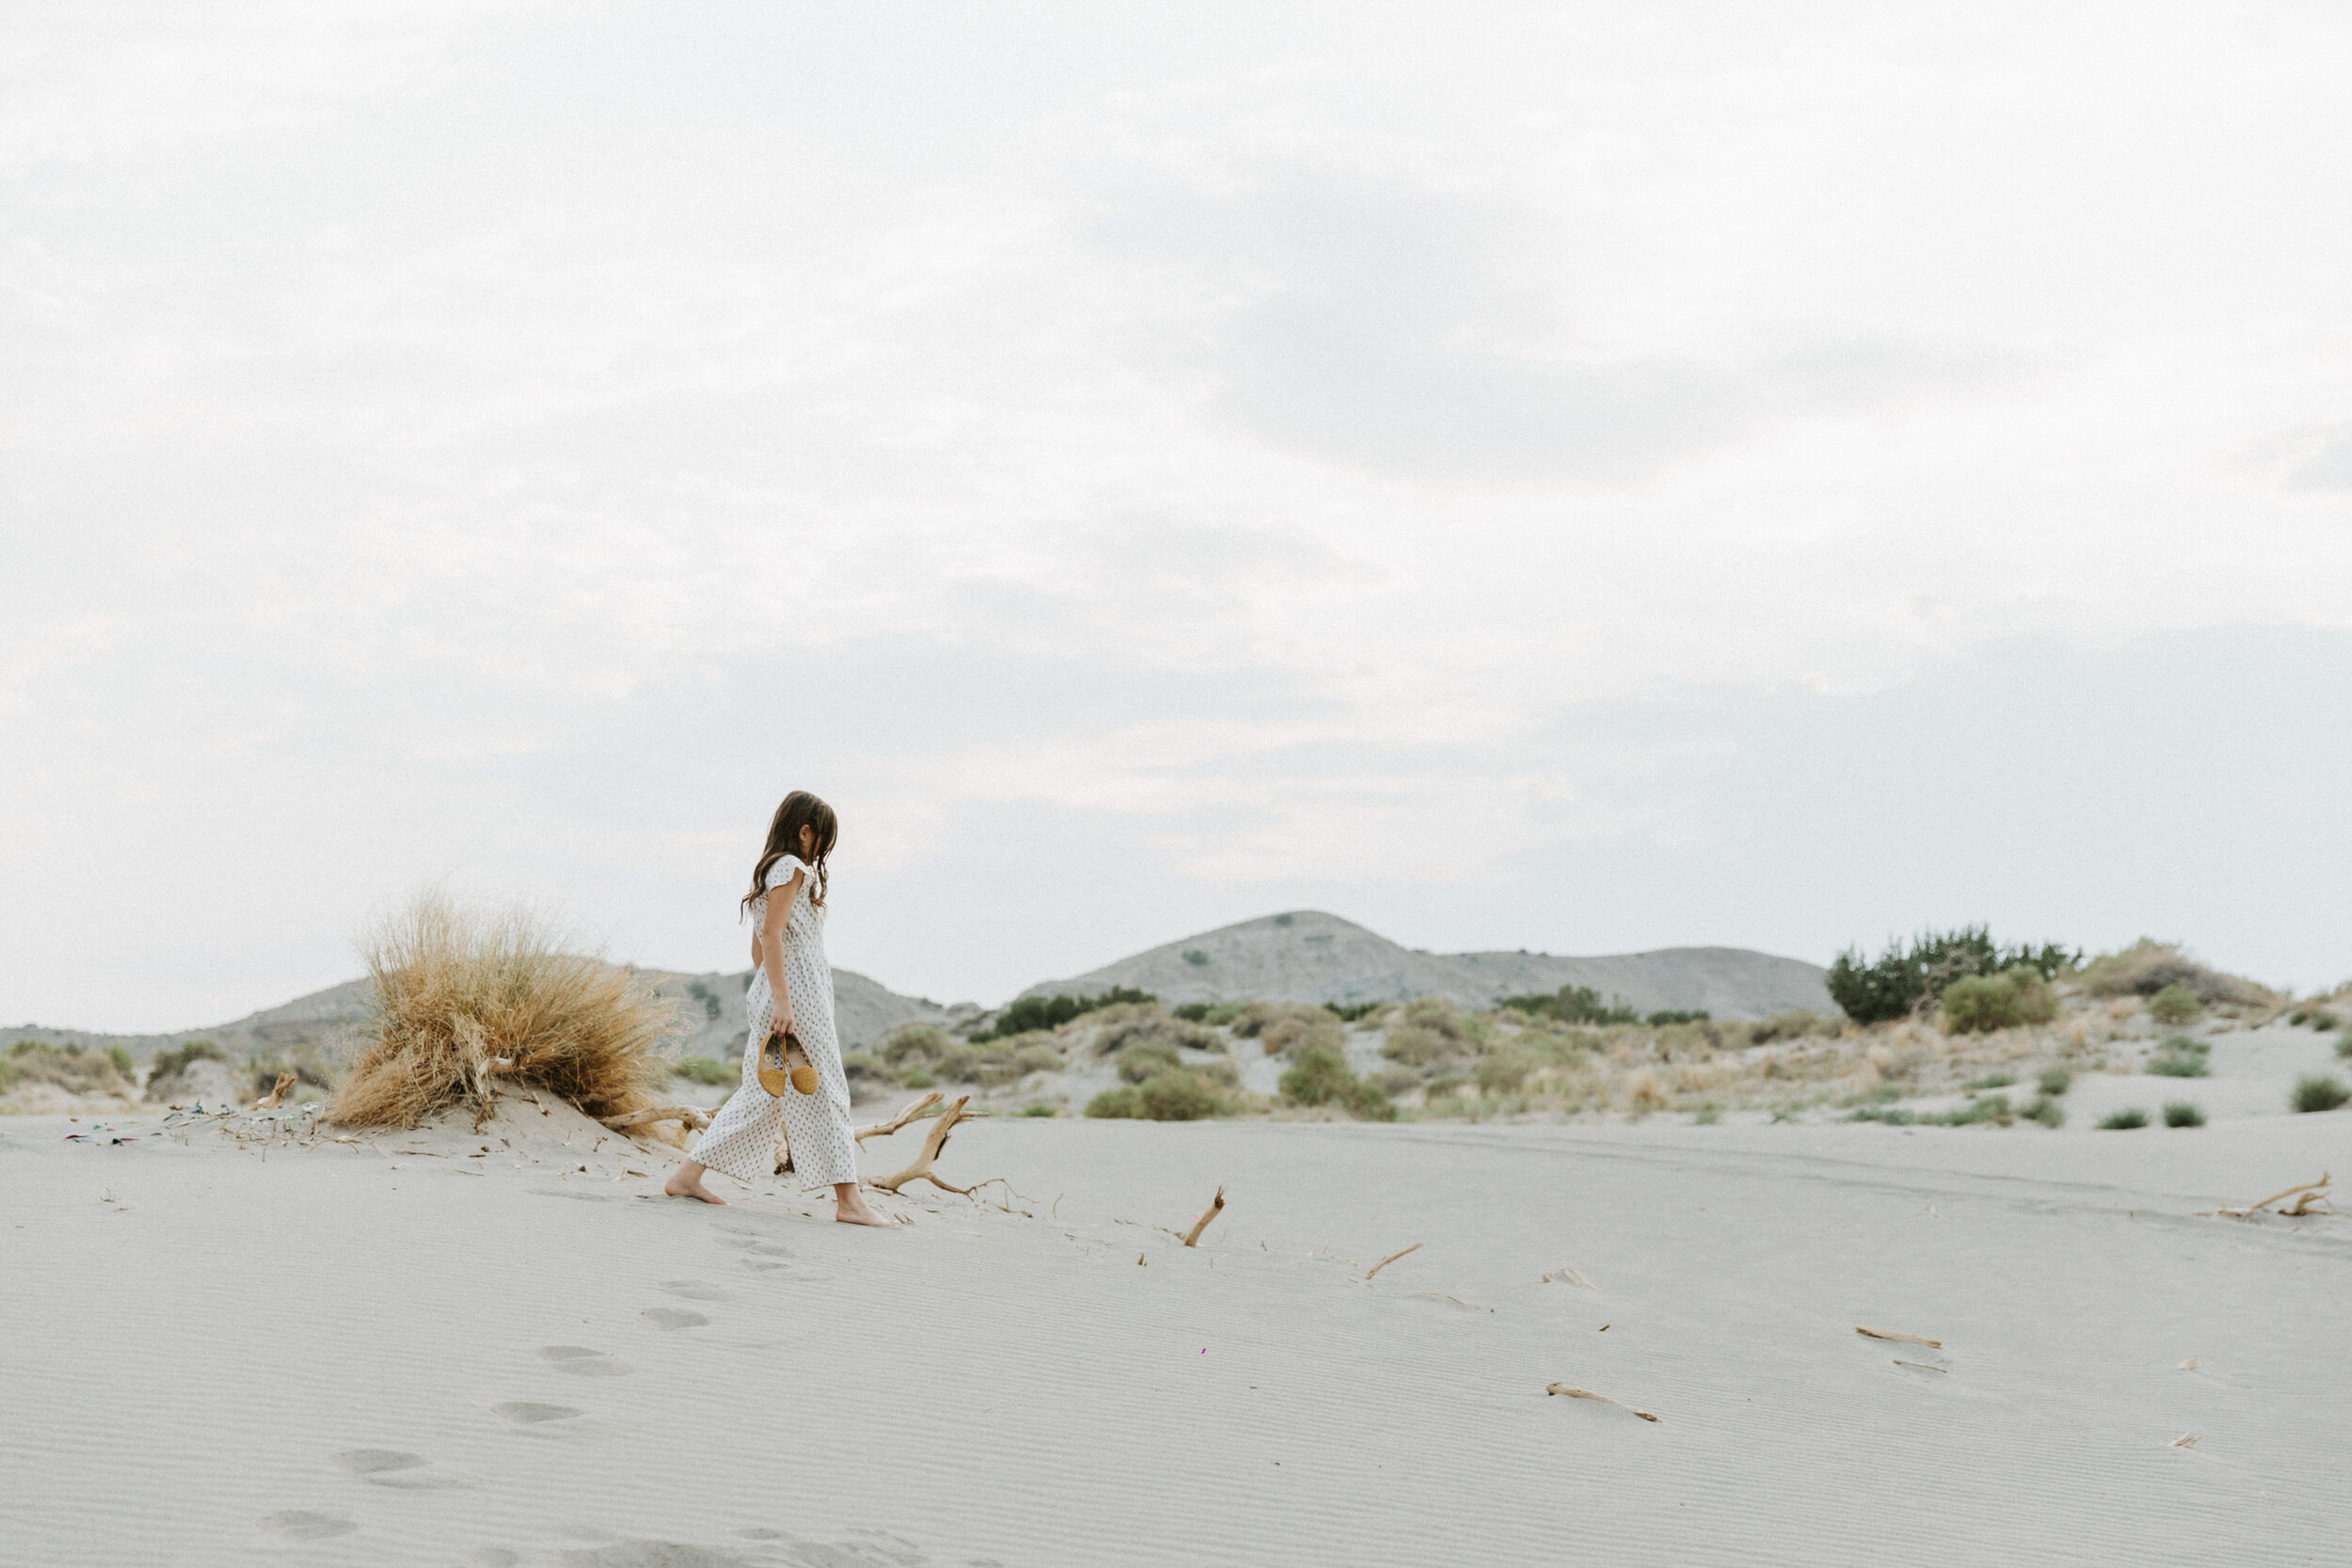 girl walking on sandy landscape holding shoes in hand